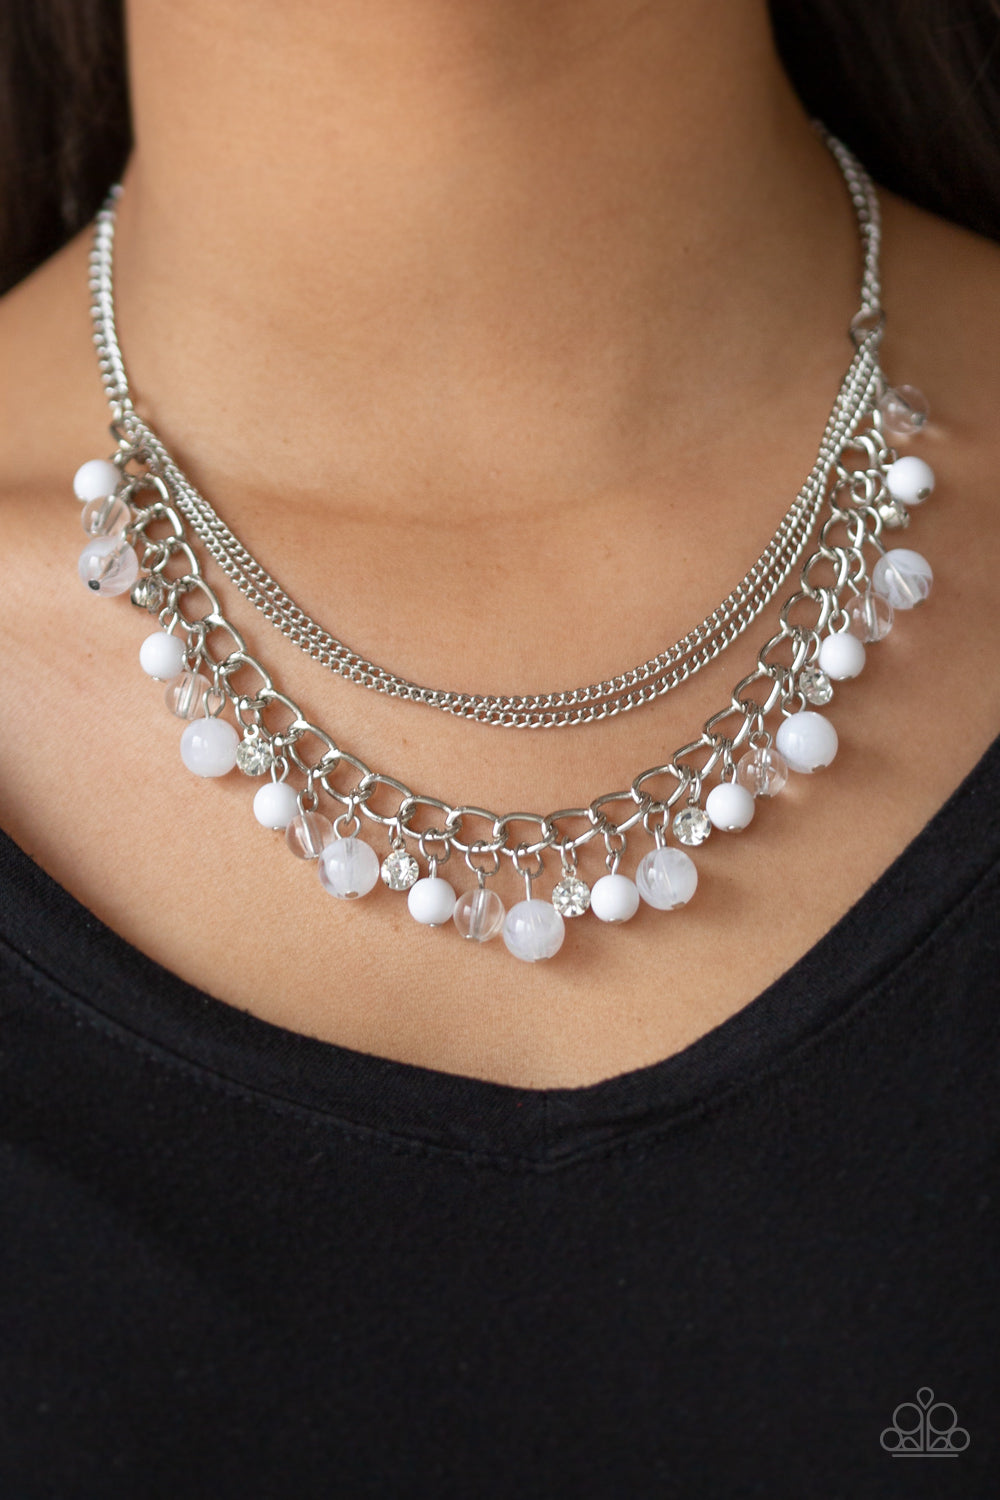 Wait and SEA White Necklace Set & Let Me SEA! White Bracelet Combo - Princess Glam Shop